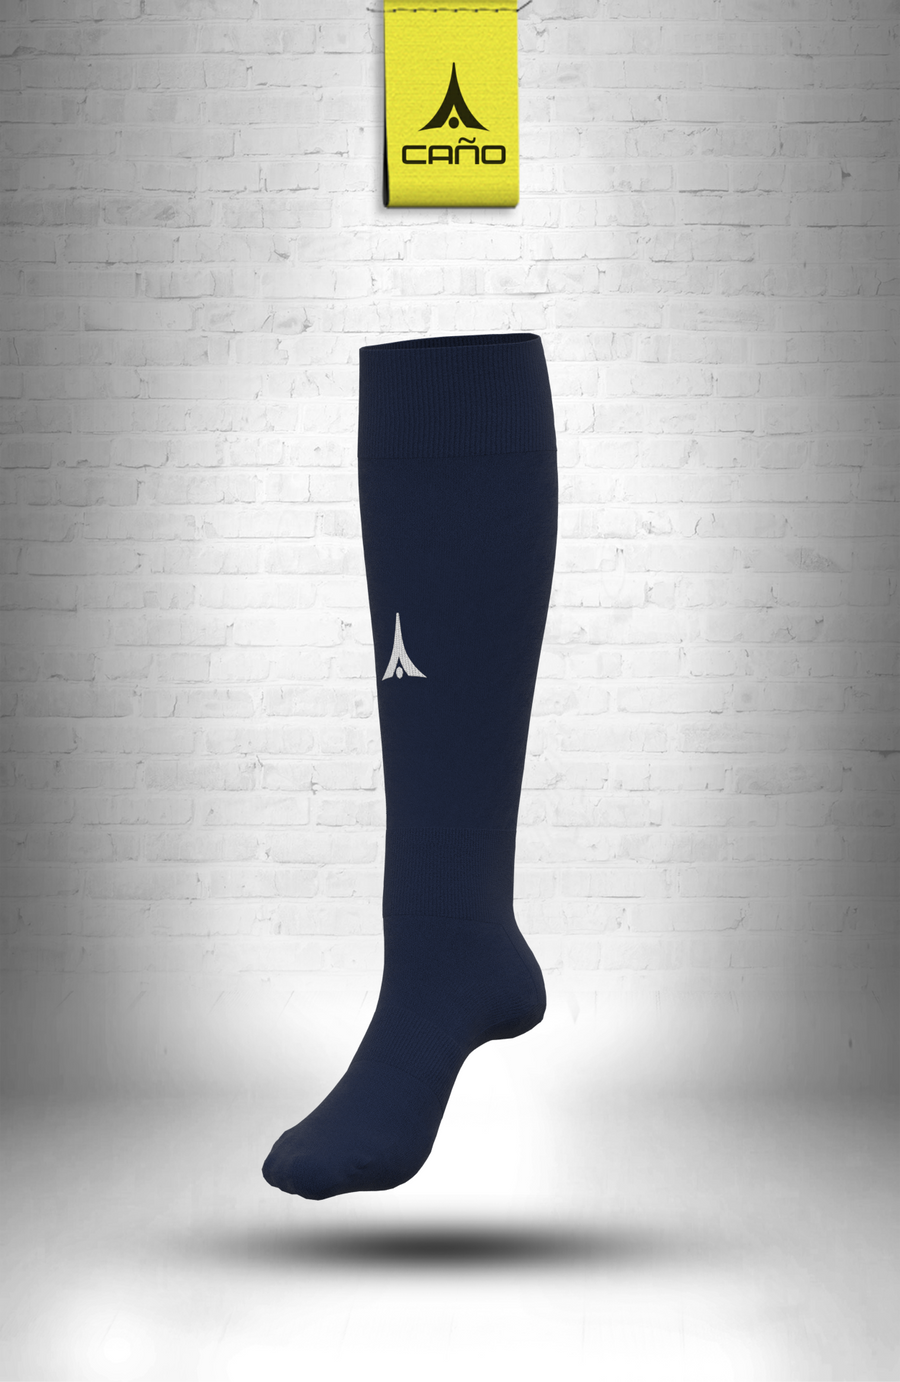 $10.00 - Caño Navy Blue Soccer Sock